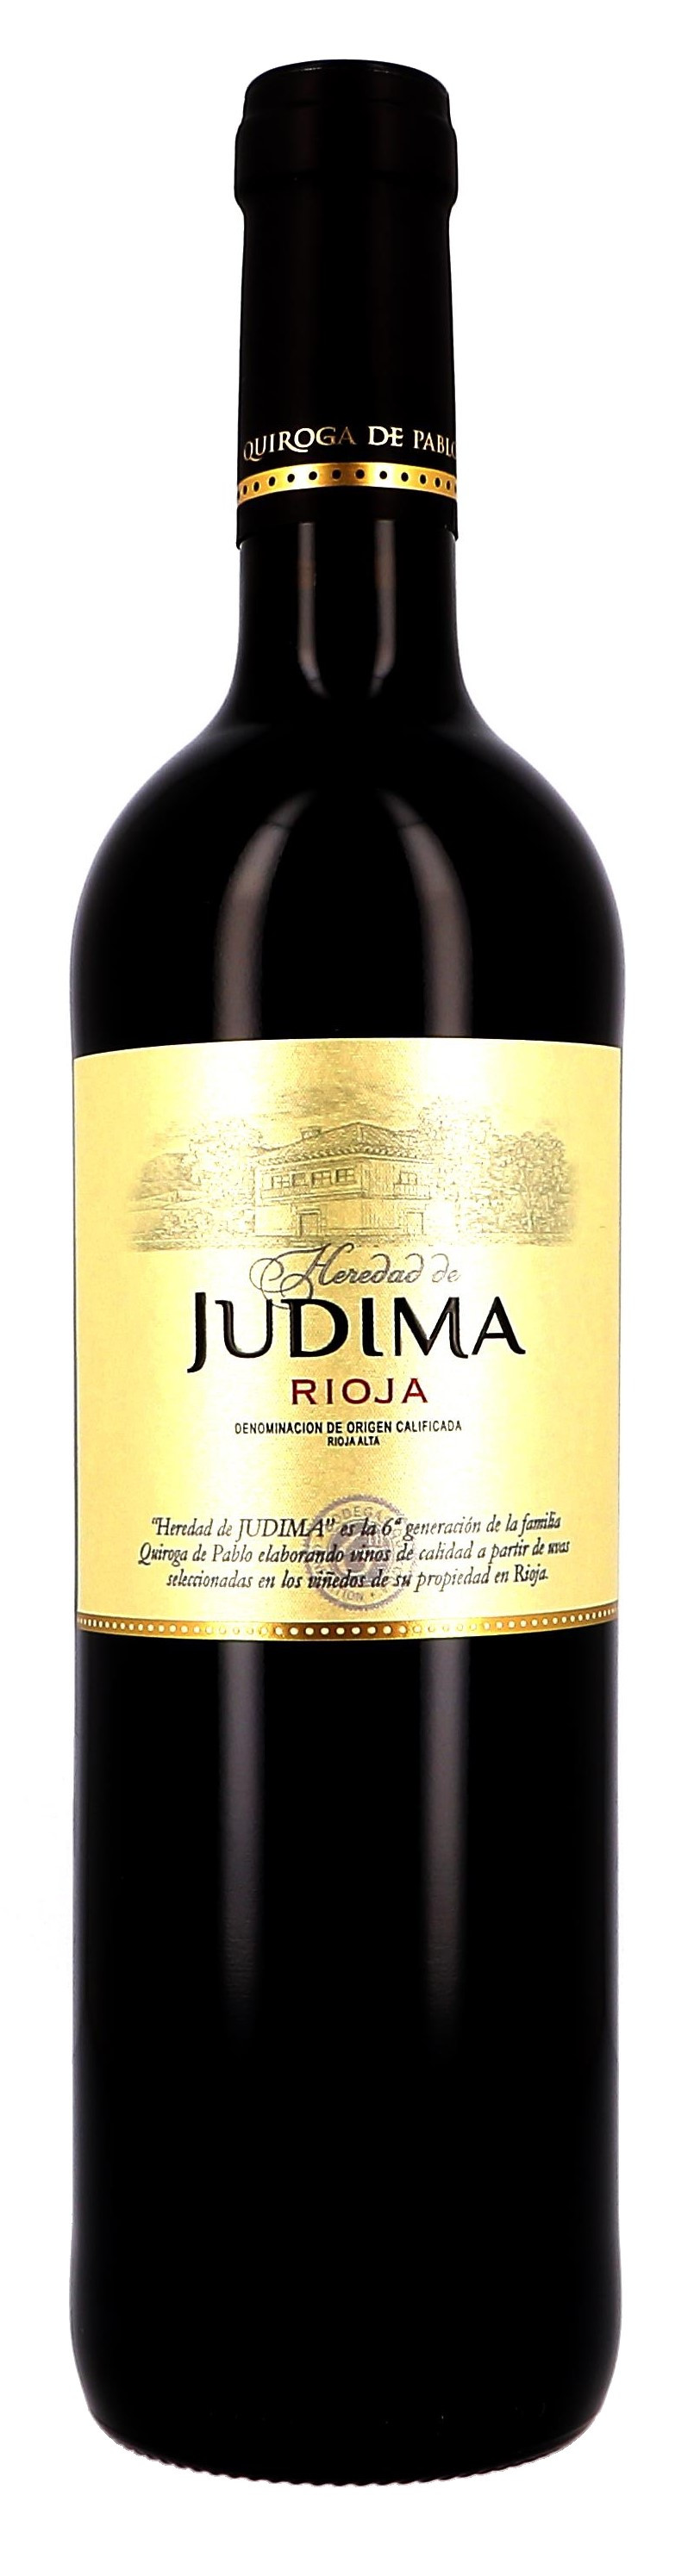 Heredad de Judima Tempranillo tinto 75cl 2018 Rioja Bodegas Quiroga de Pablo (Wijnen)